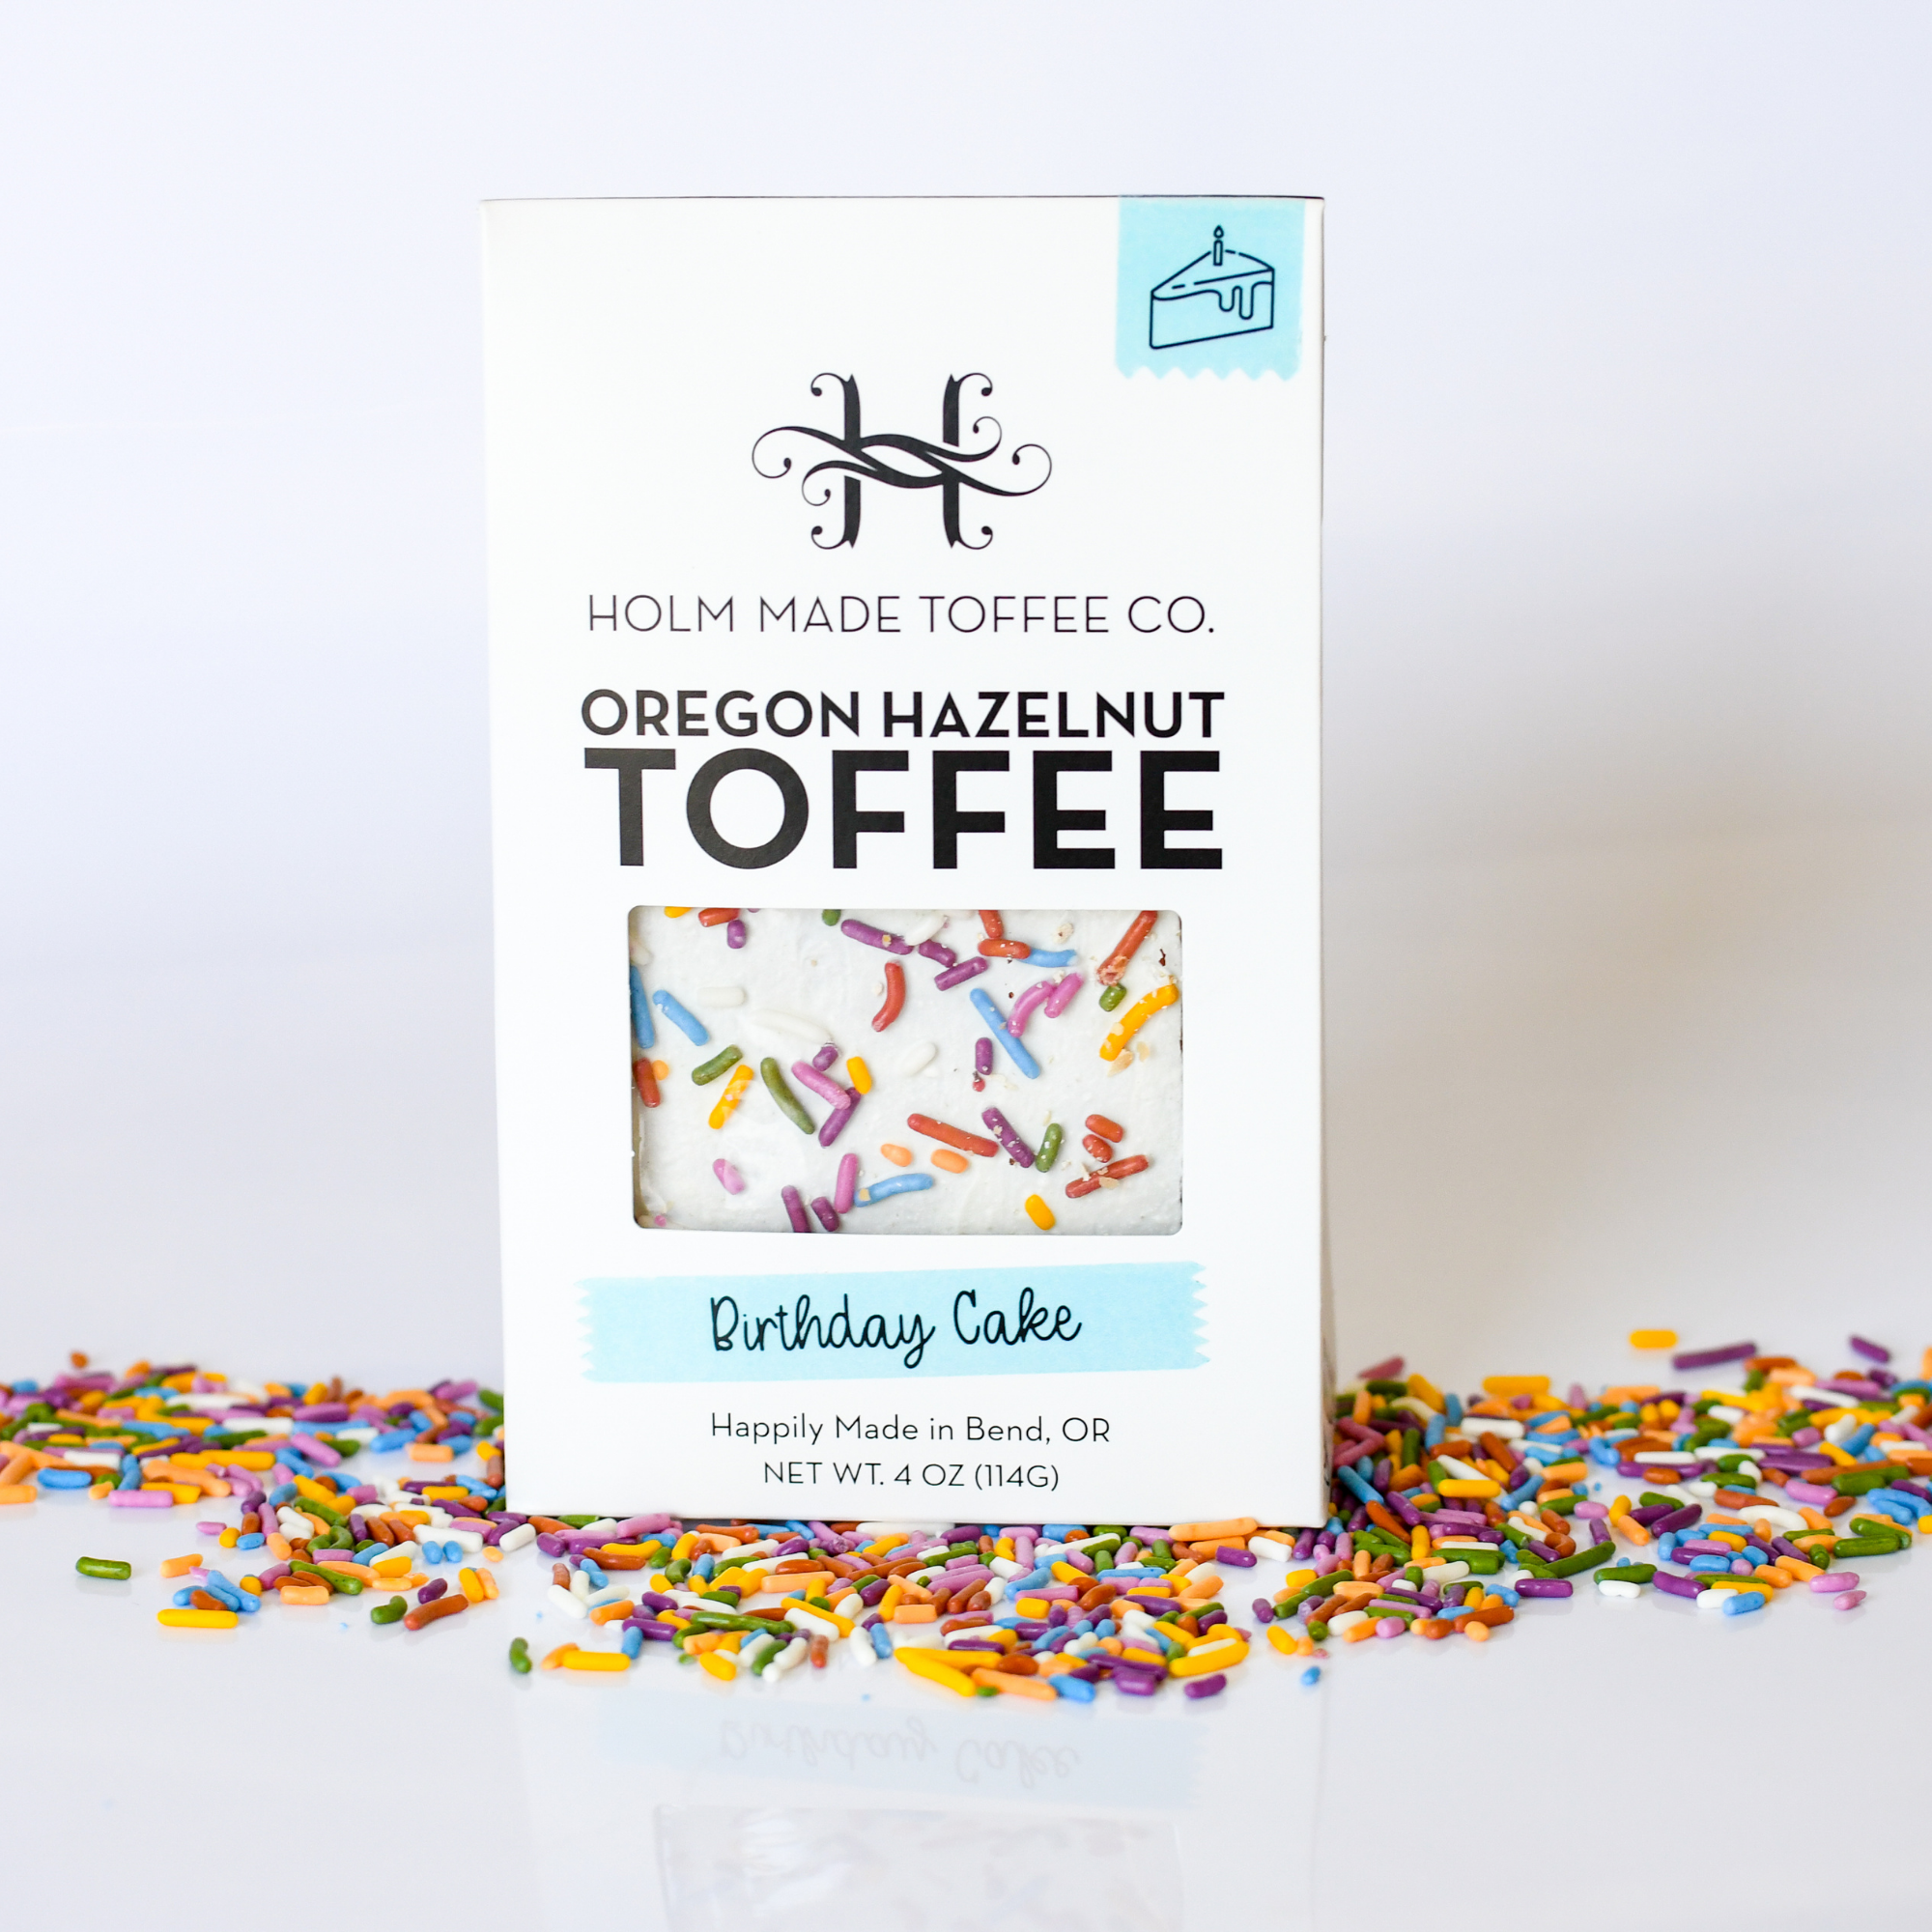 Holm Made Toffee Co. - Birthday Cake - Oregon Hazelnut Toffee